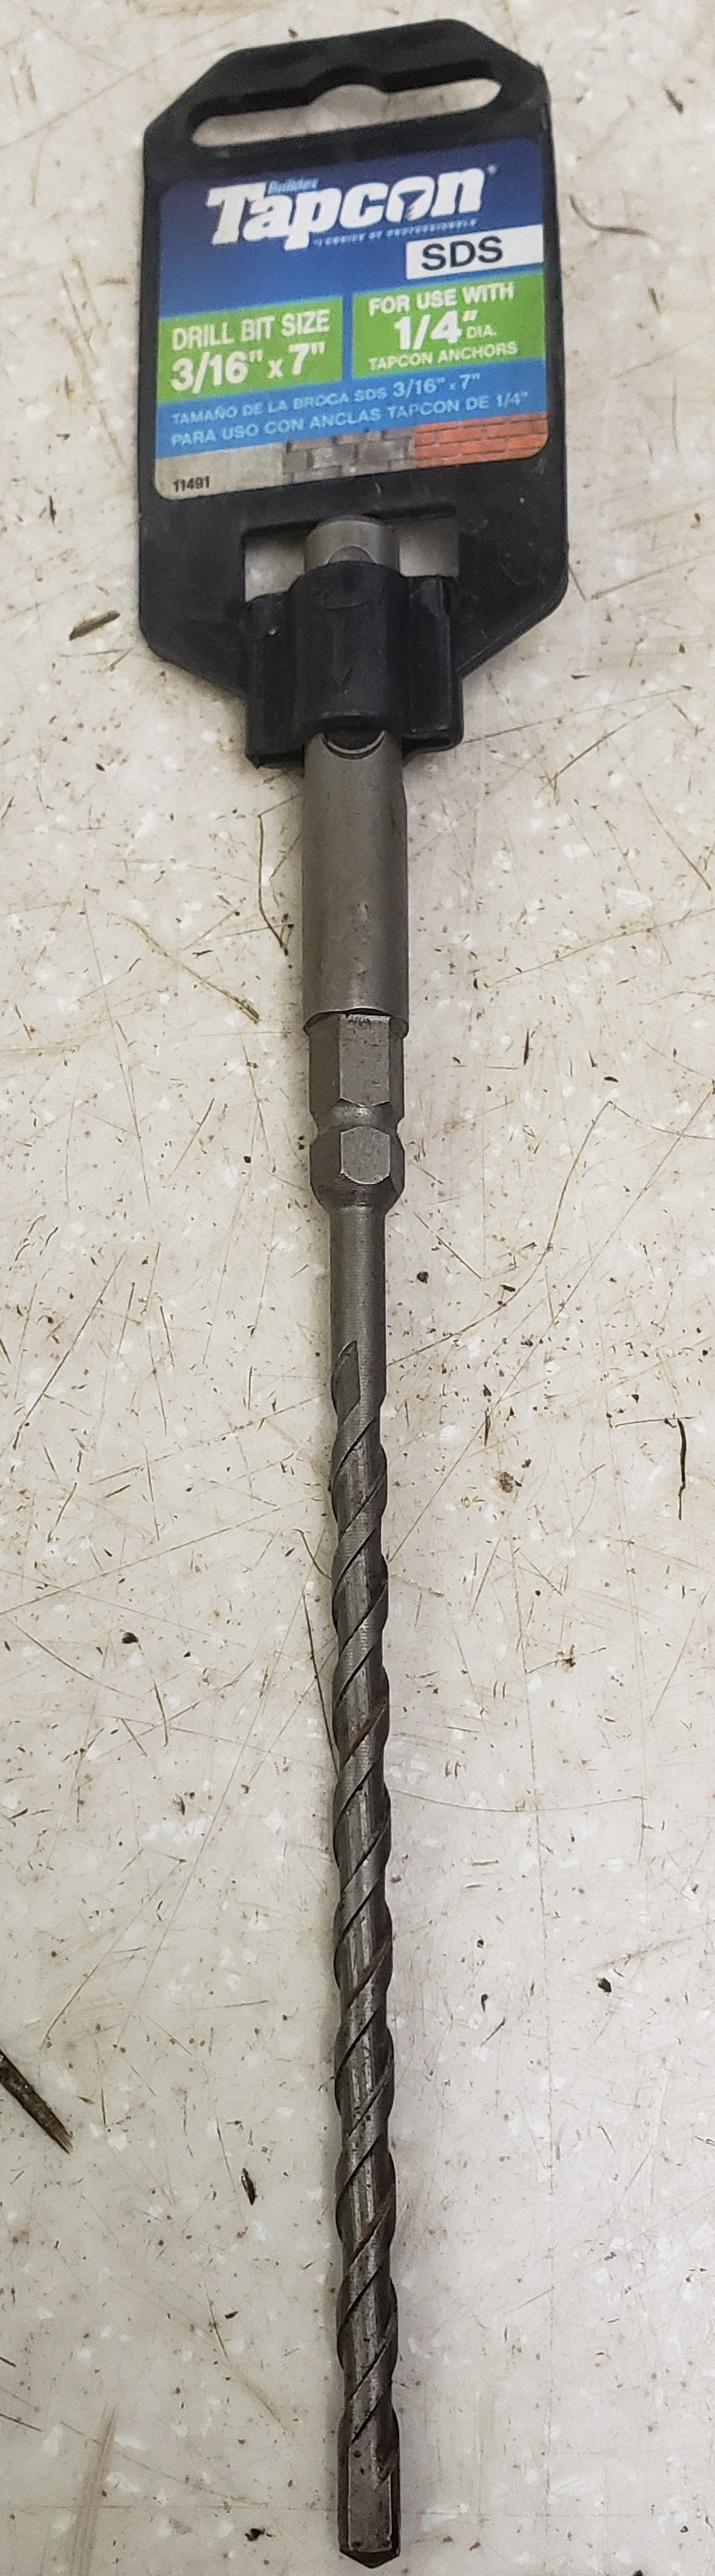 ITW Buildex 11491 Tapcon Hammer Drill Bit 3/16